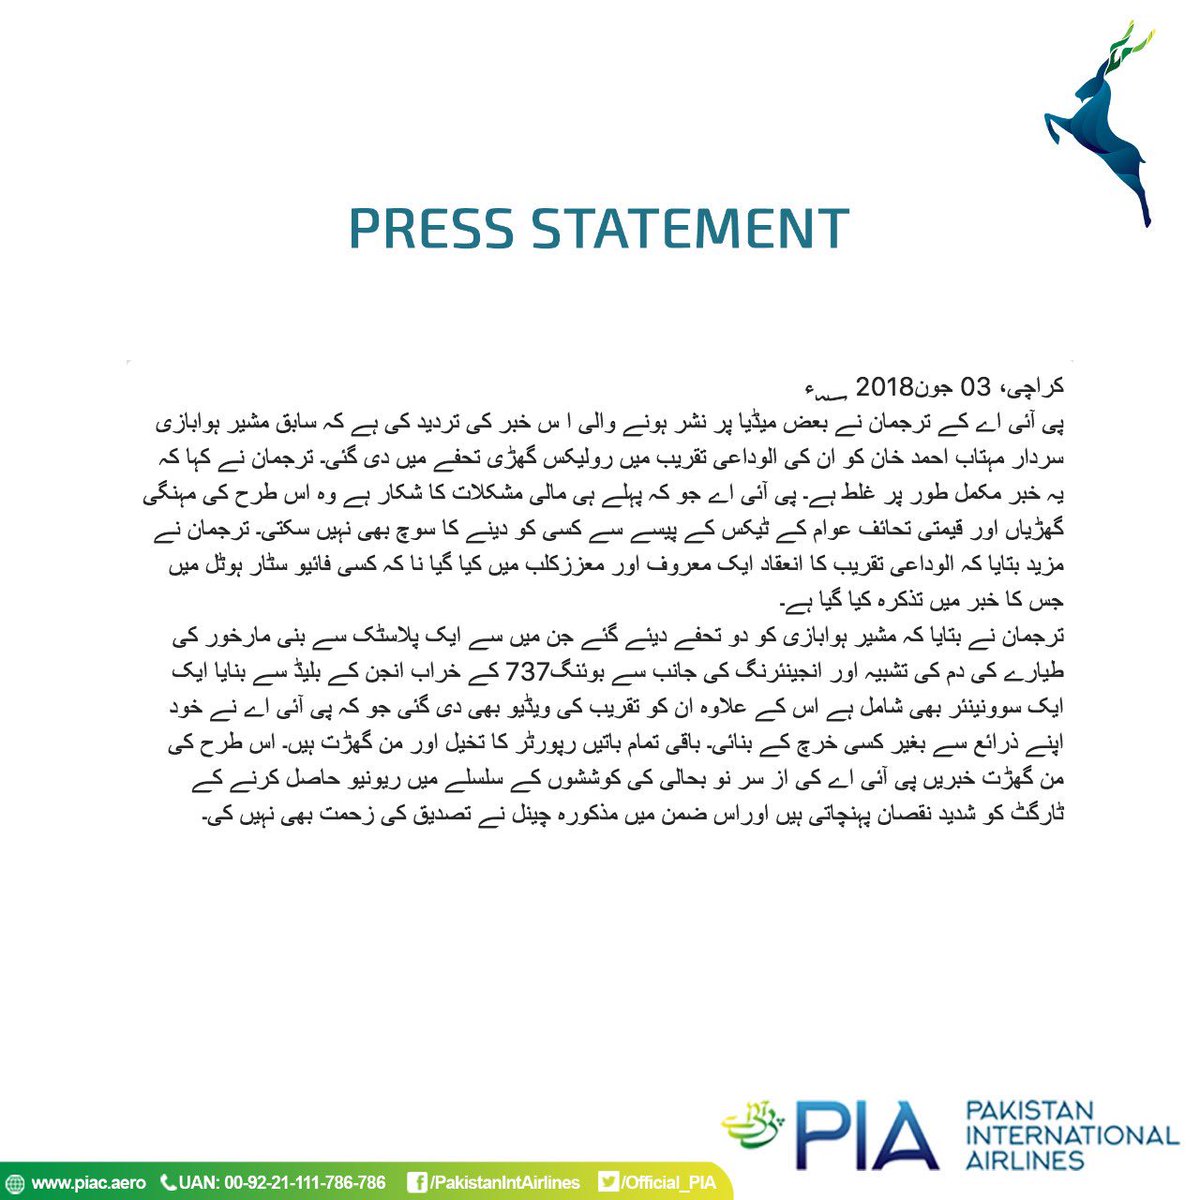 Press Release
#PIA #PakistanInternationalAirlines